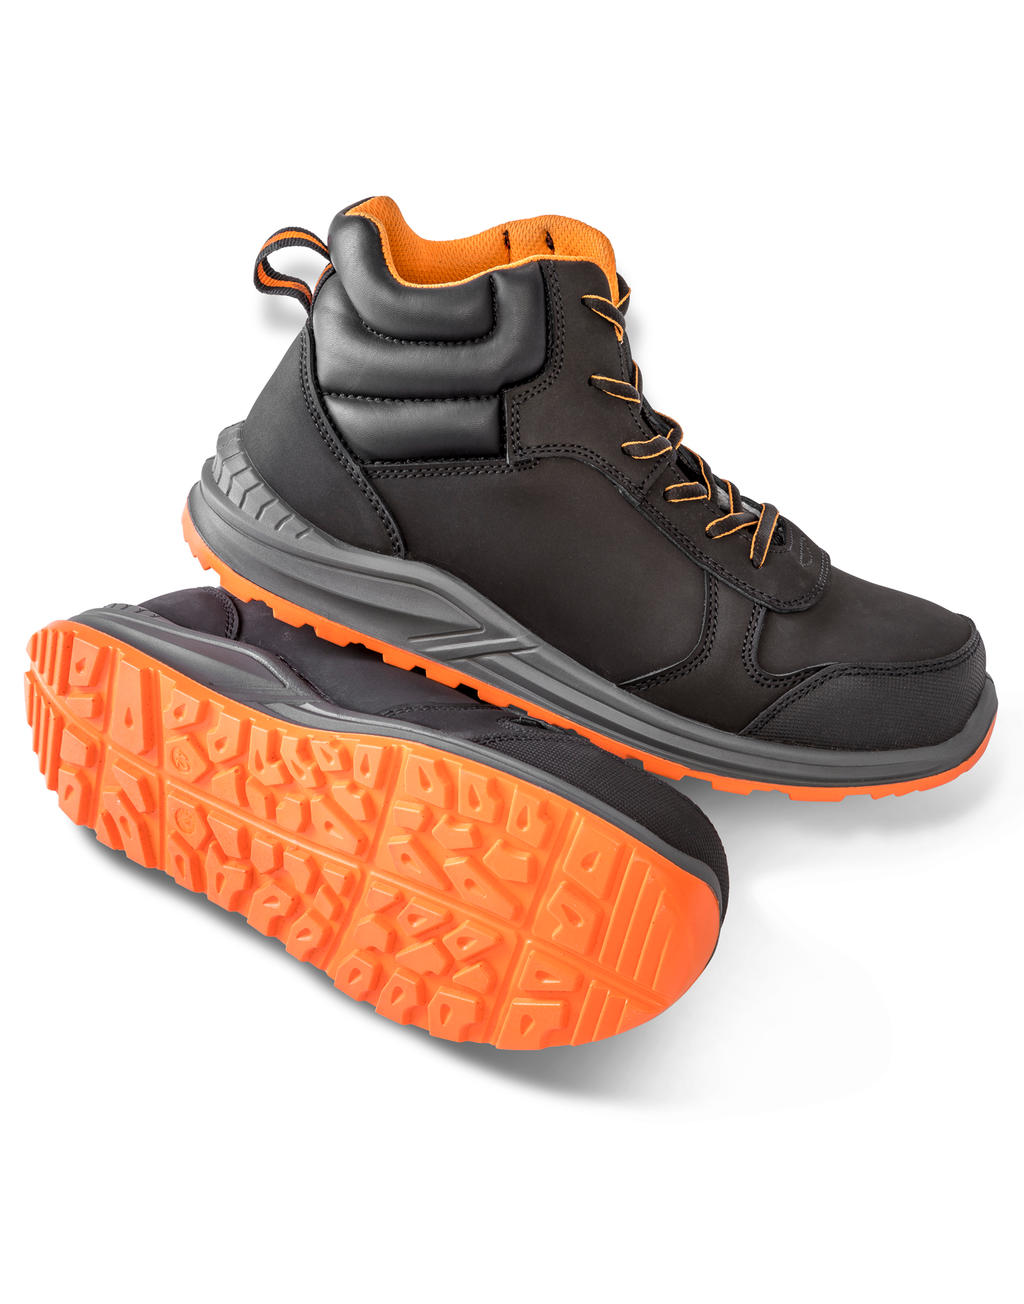 Pracovný obuv Stirling Safety Boot - size 36 - black/grey/orange